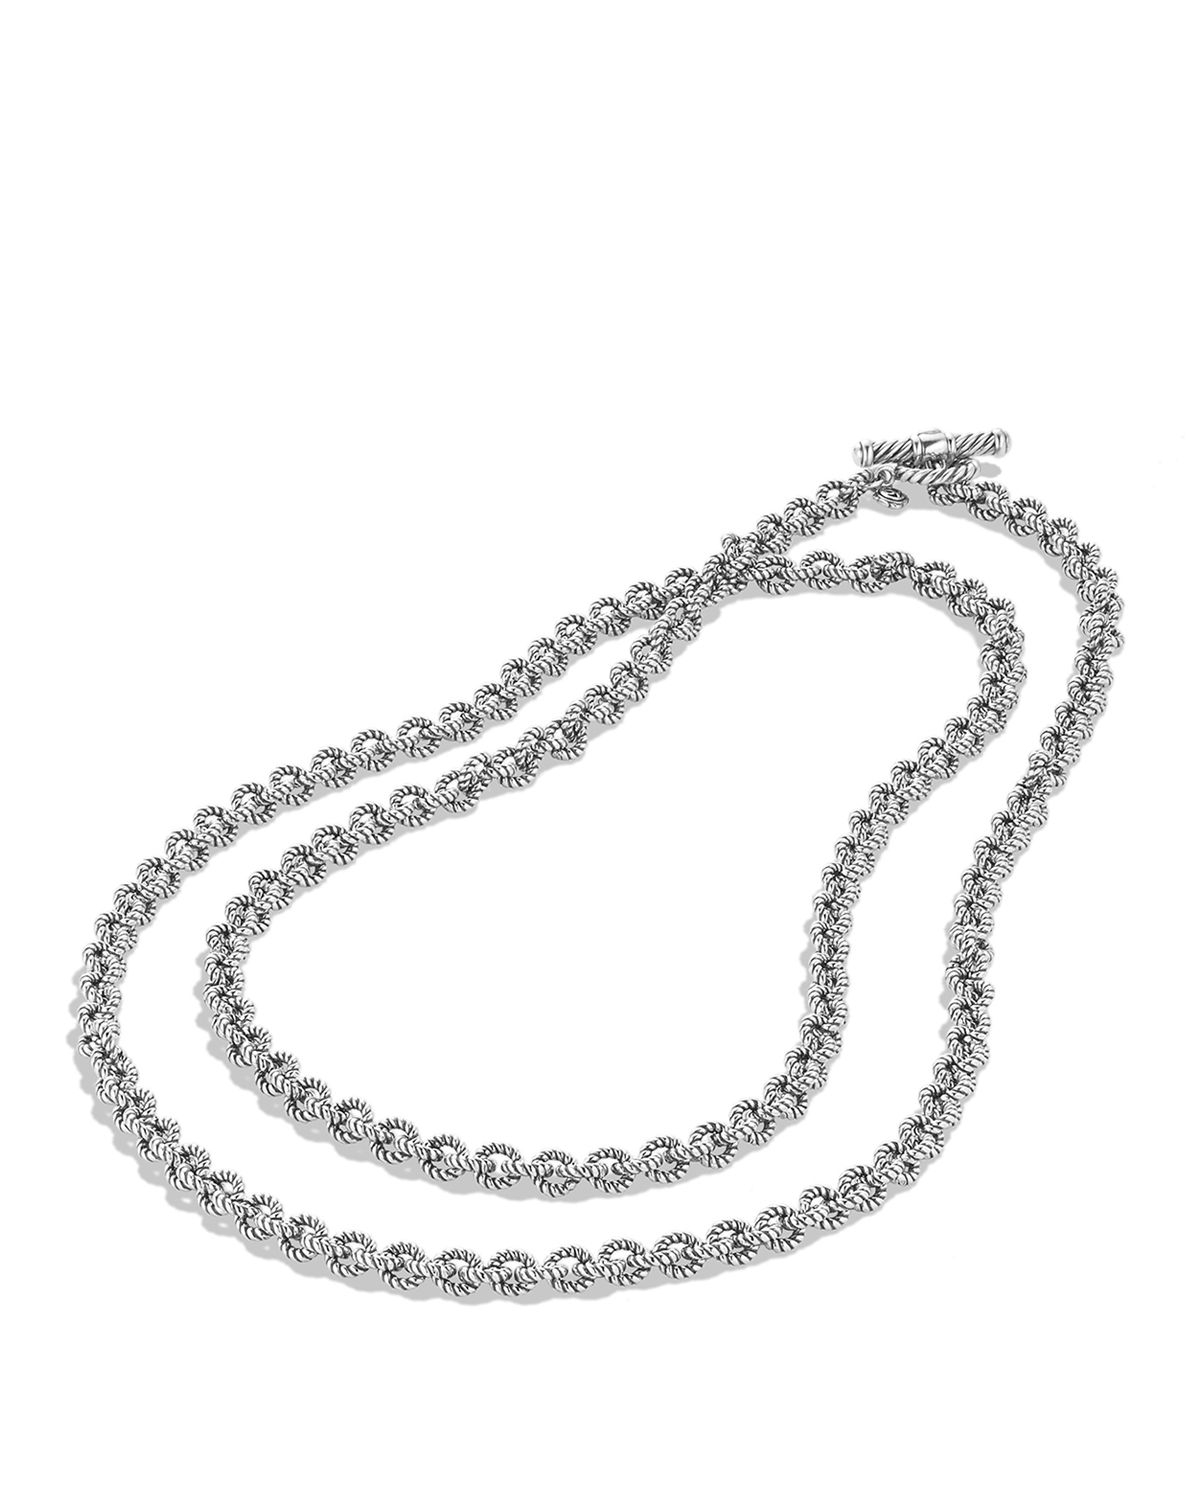 David yurman Cable Rolo Chain Necklace, 18